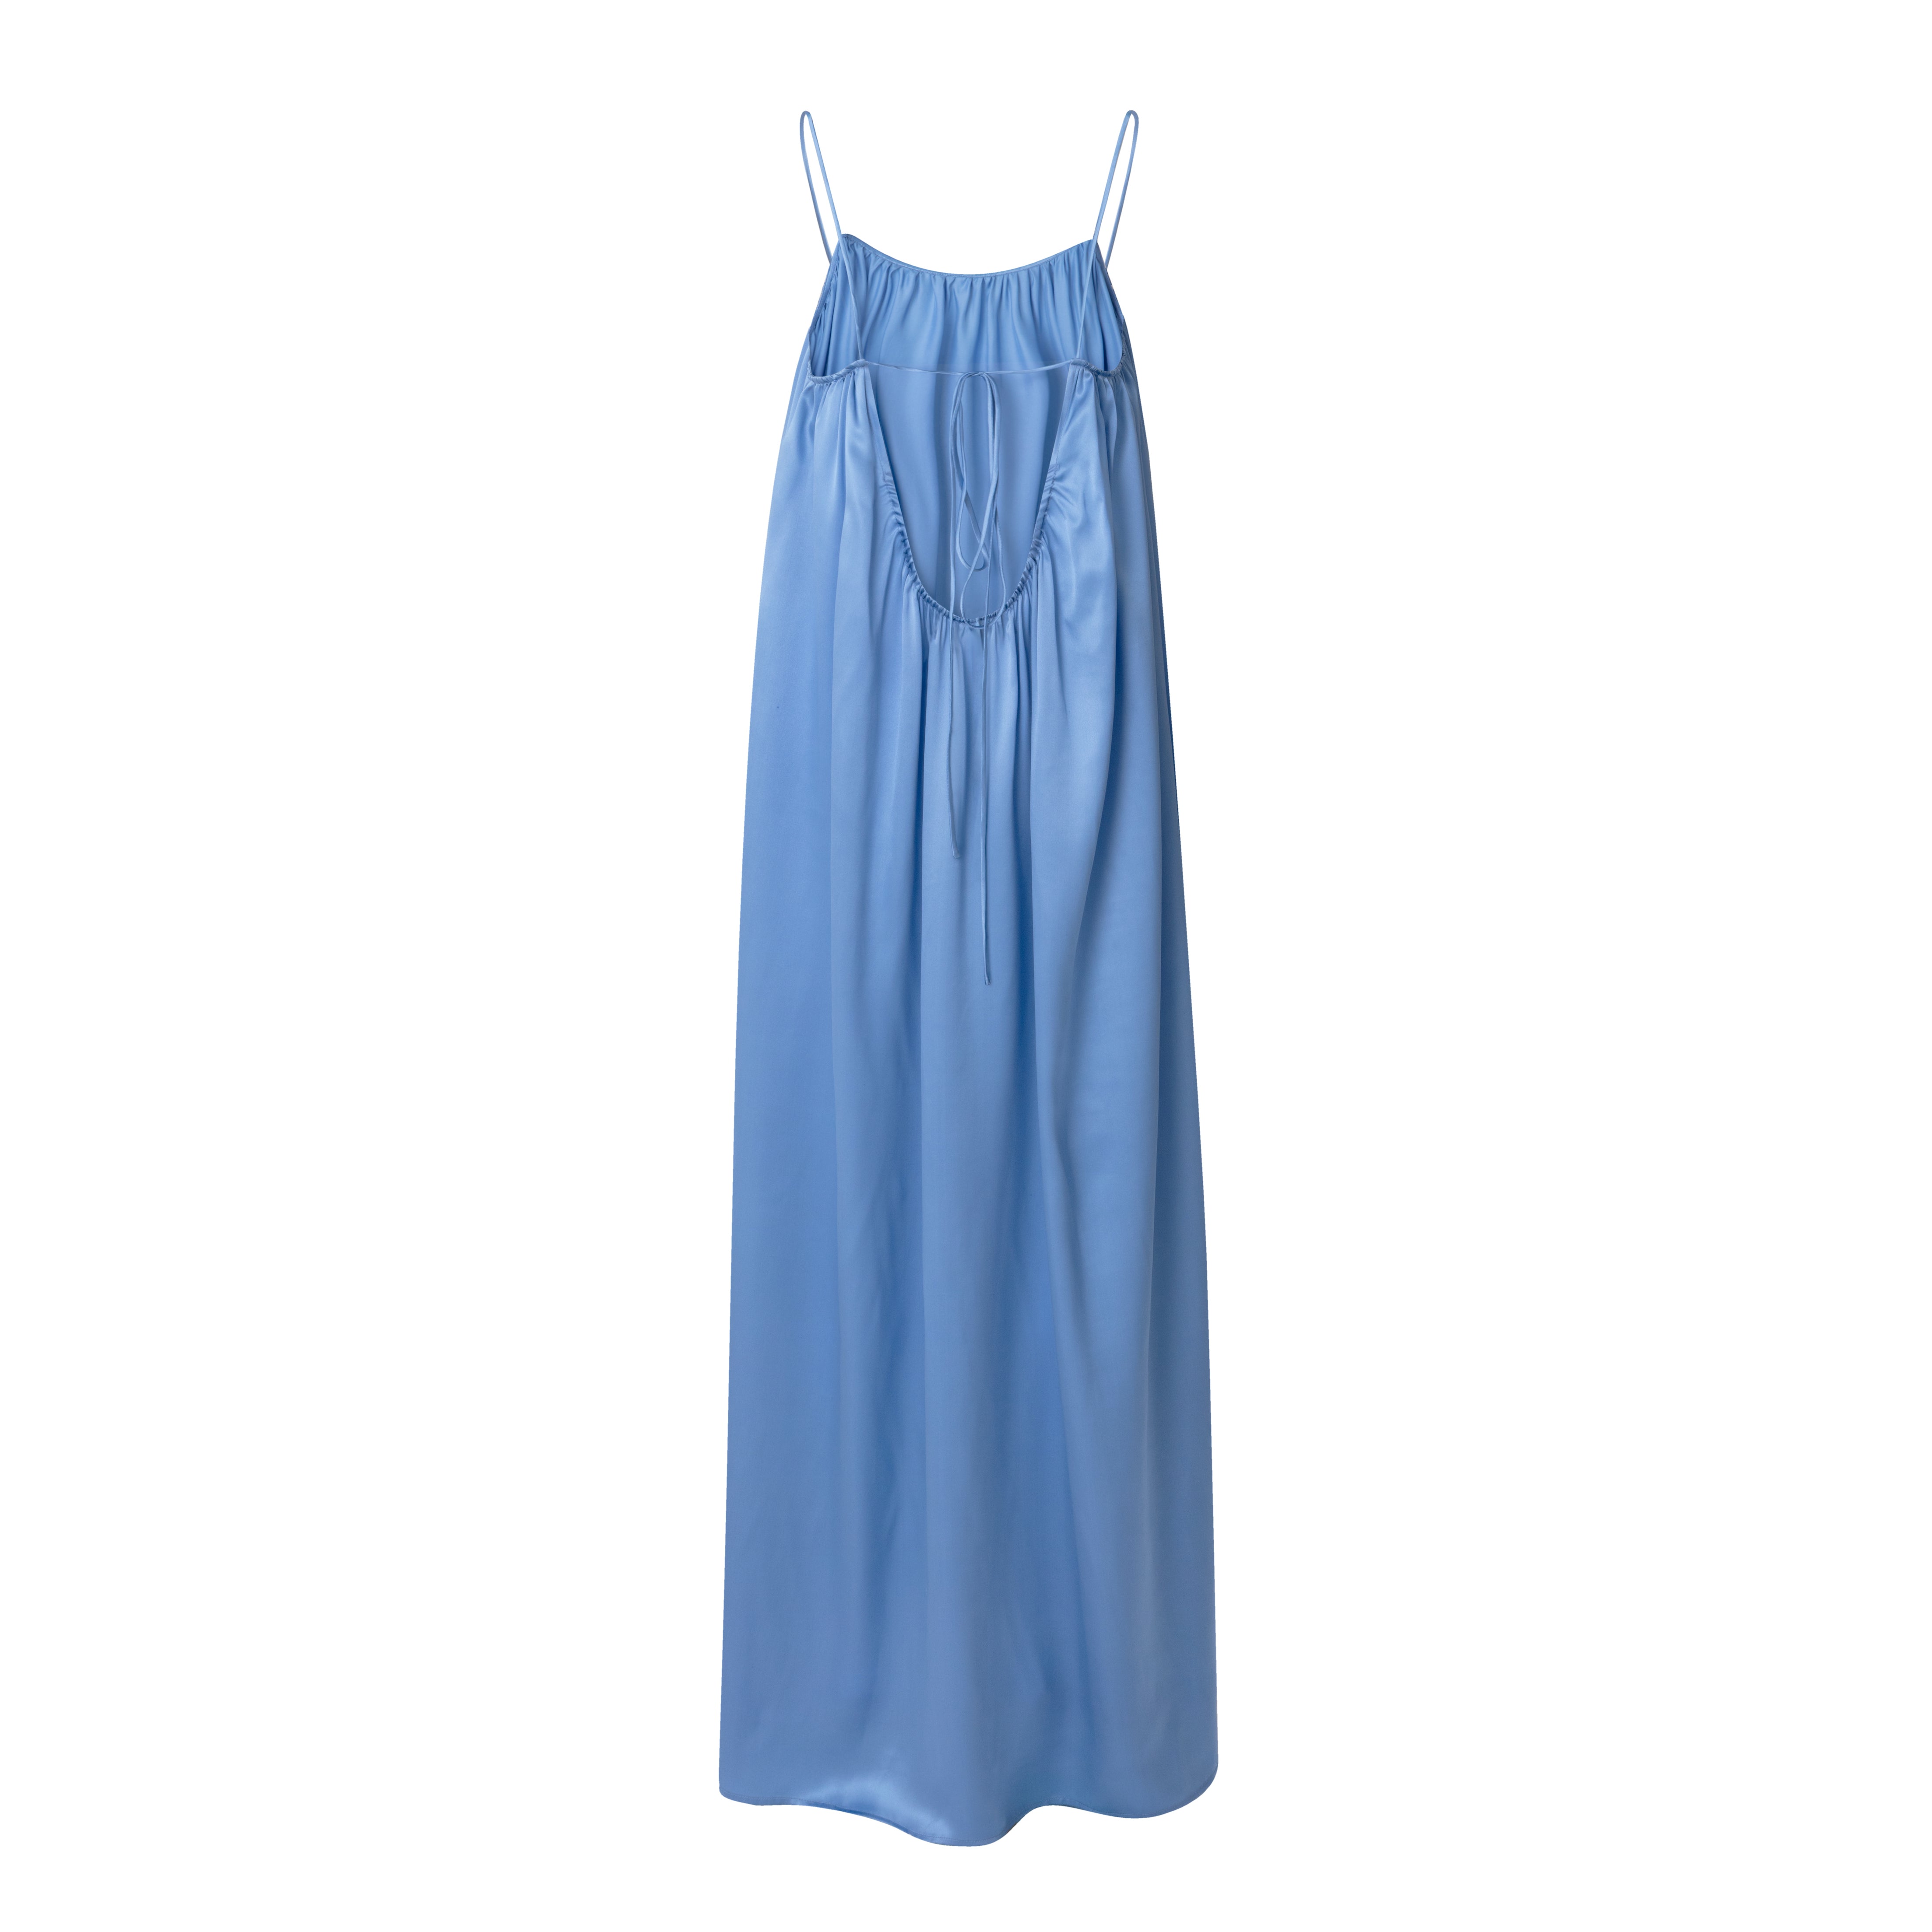 Mandibreeze resort wear blue 100% silk dress summer dress beachwear  blå silkes känning slipdress spaghettistrap sommarklänning 